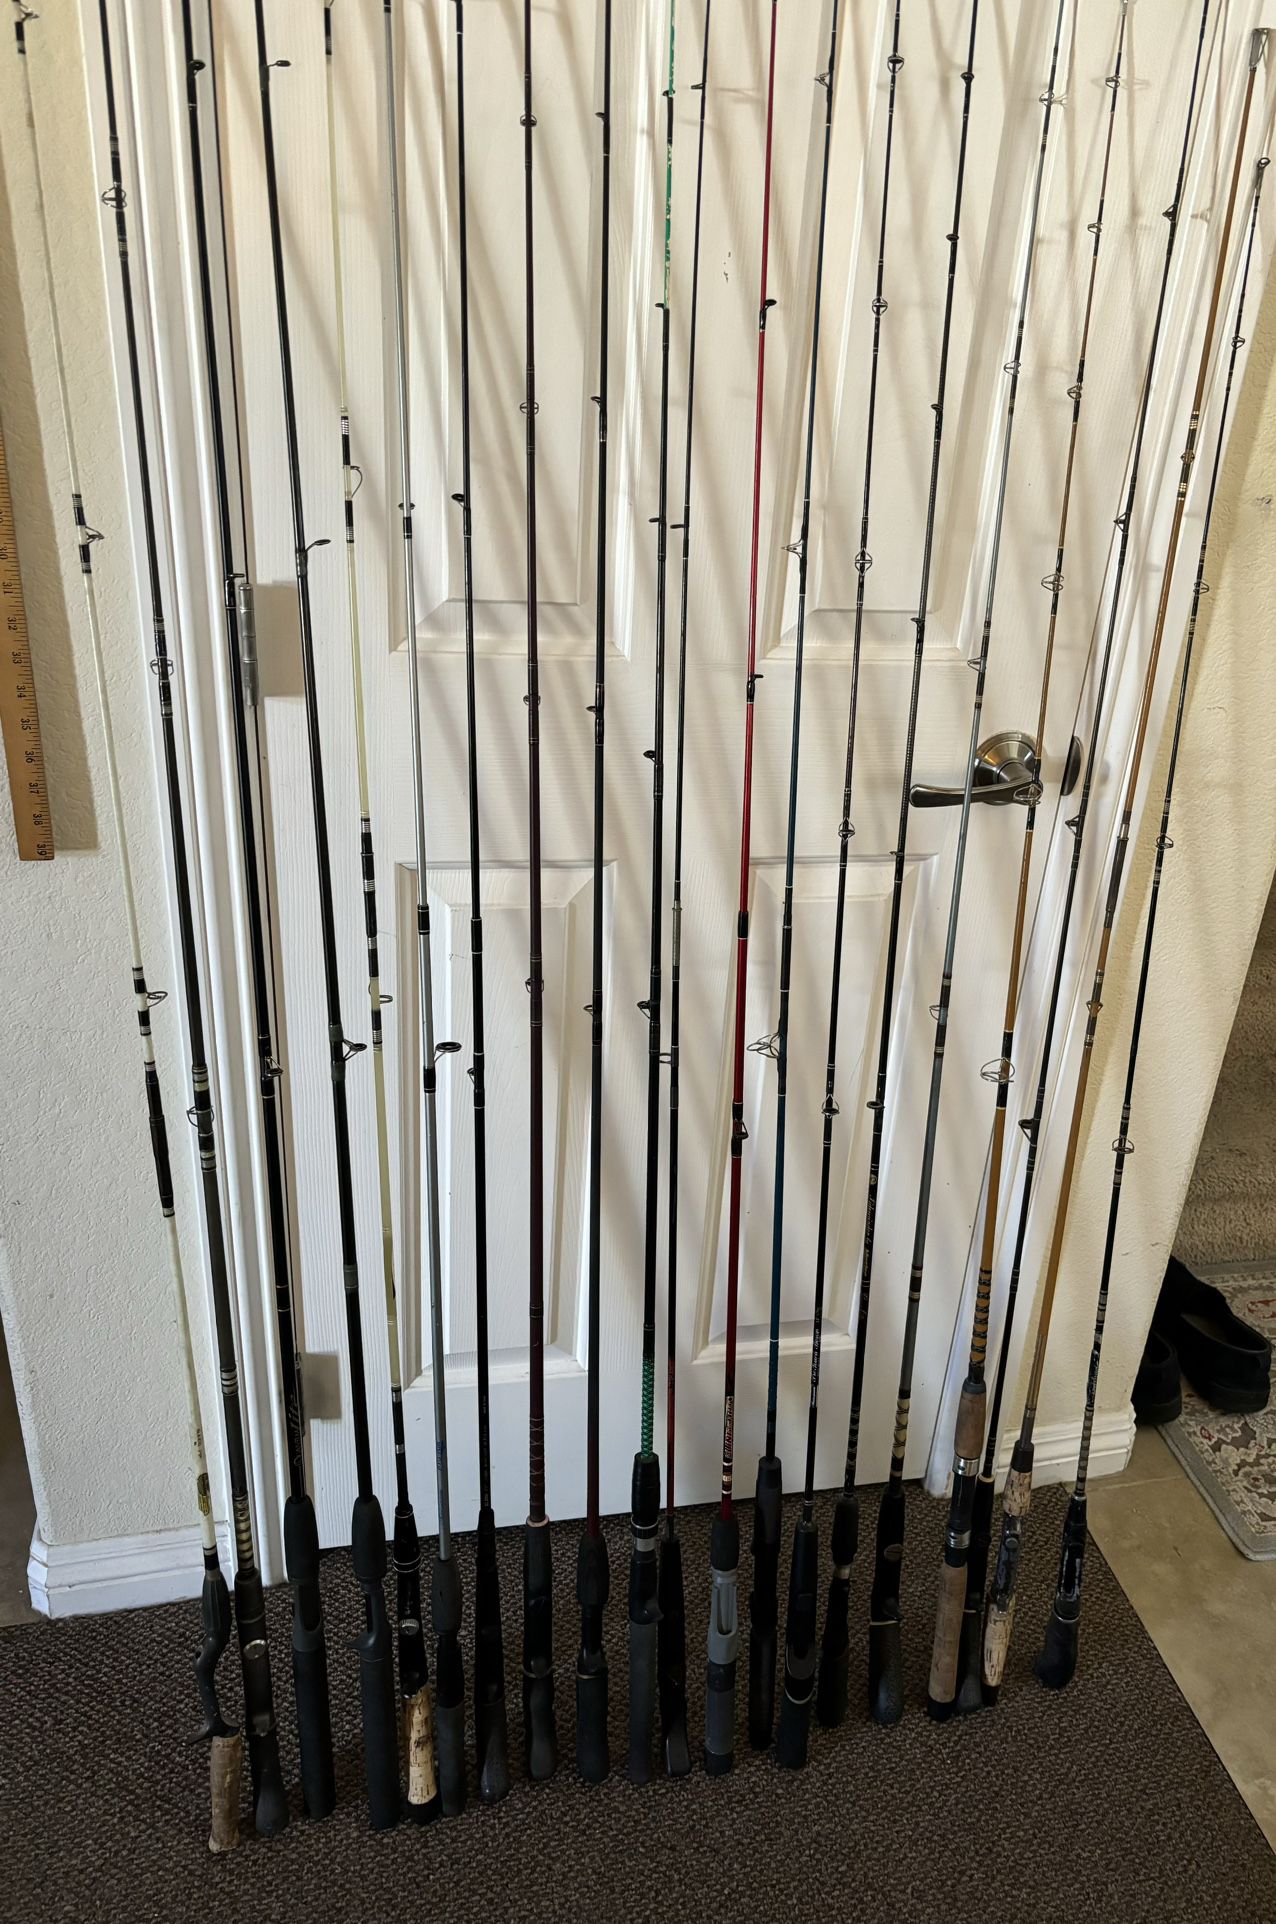 20 Assorted Fishing Baitcaster Rods